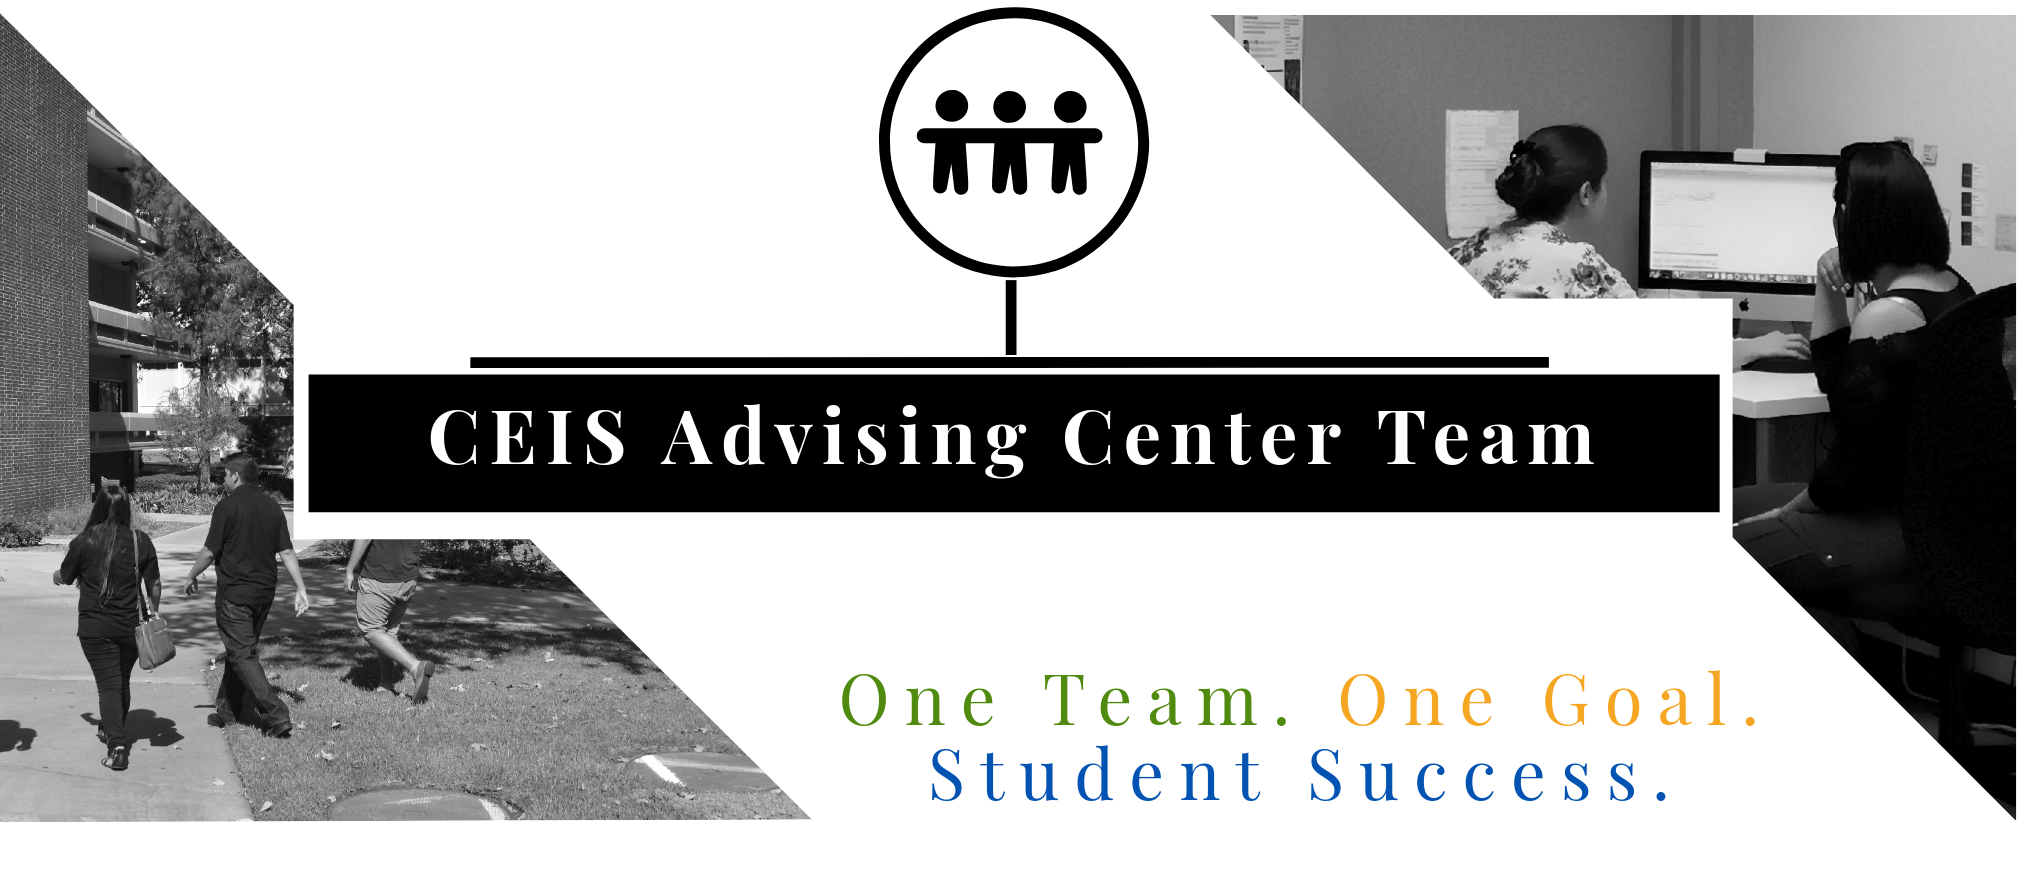 CEIS Student Success Center Team. One Team. One Goal. Student Success